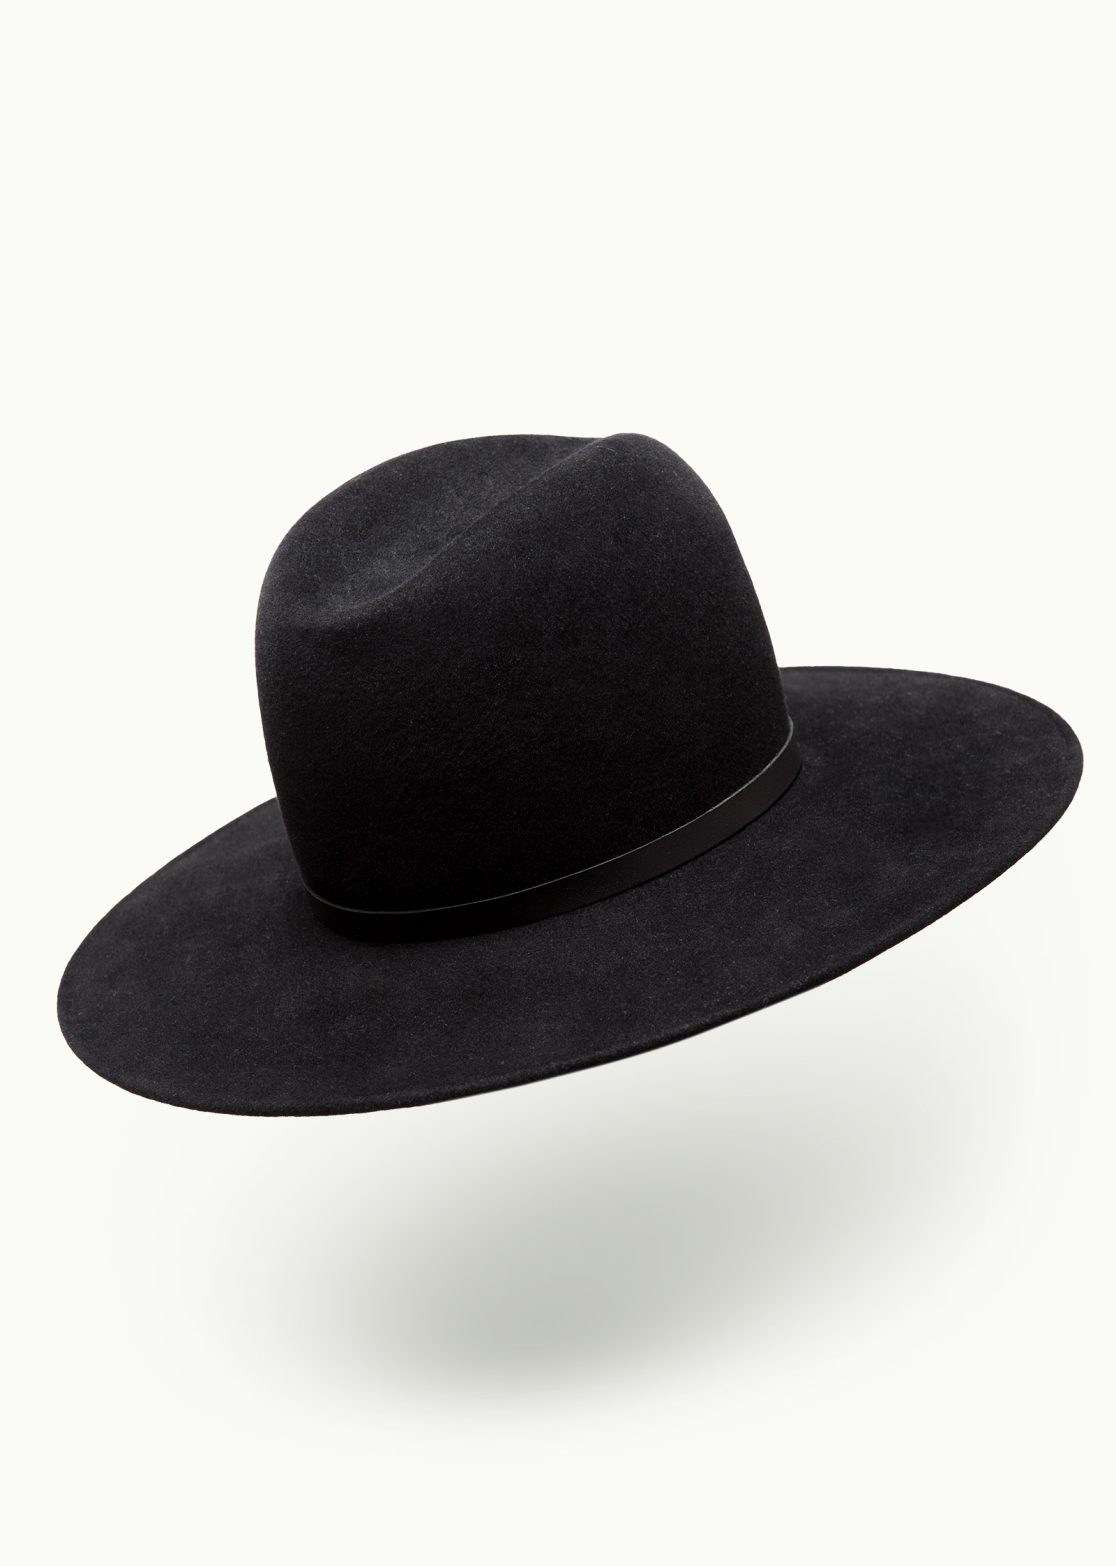 Hats - Women - Unisex - Men - River Black Suede Image Primary